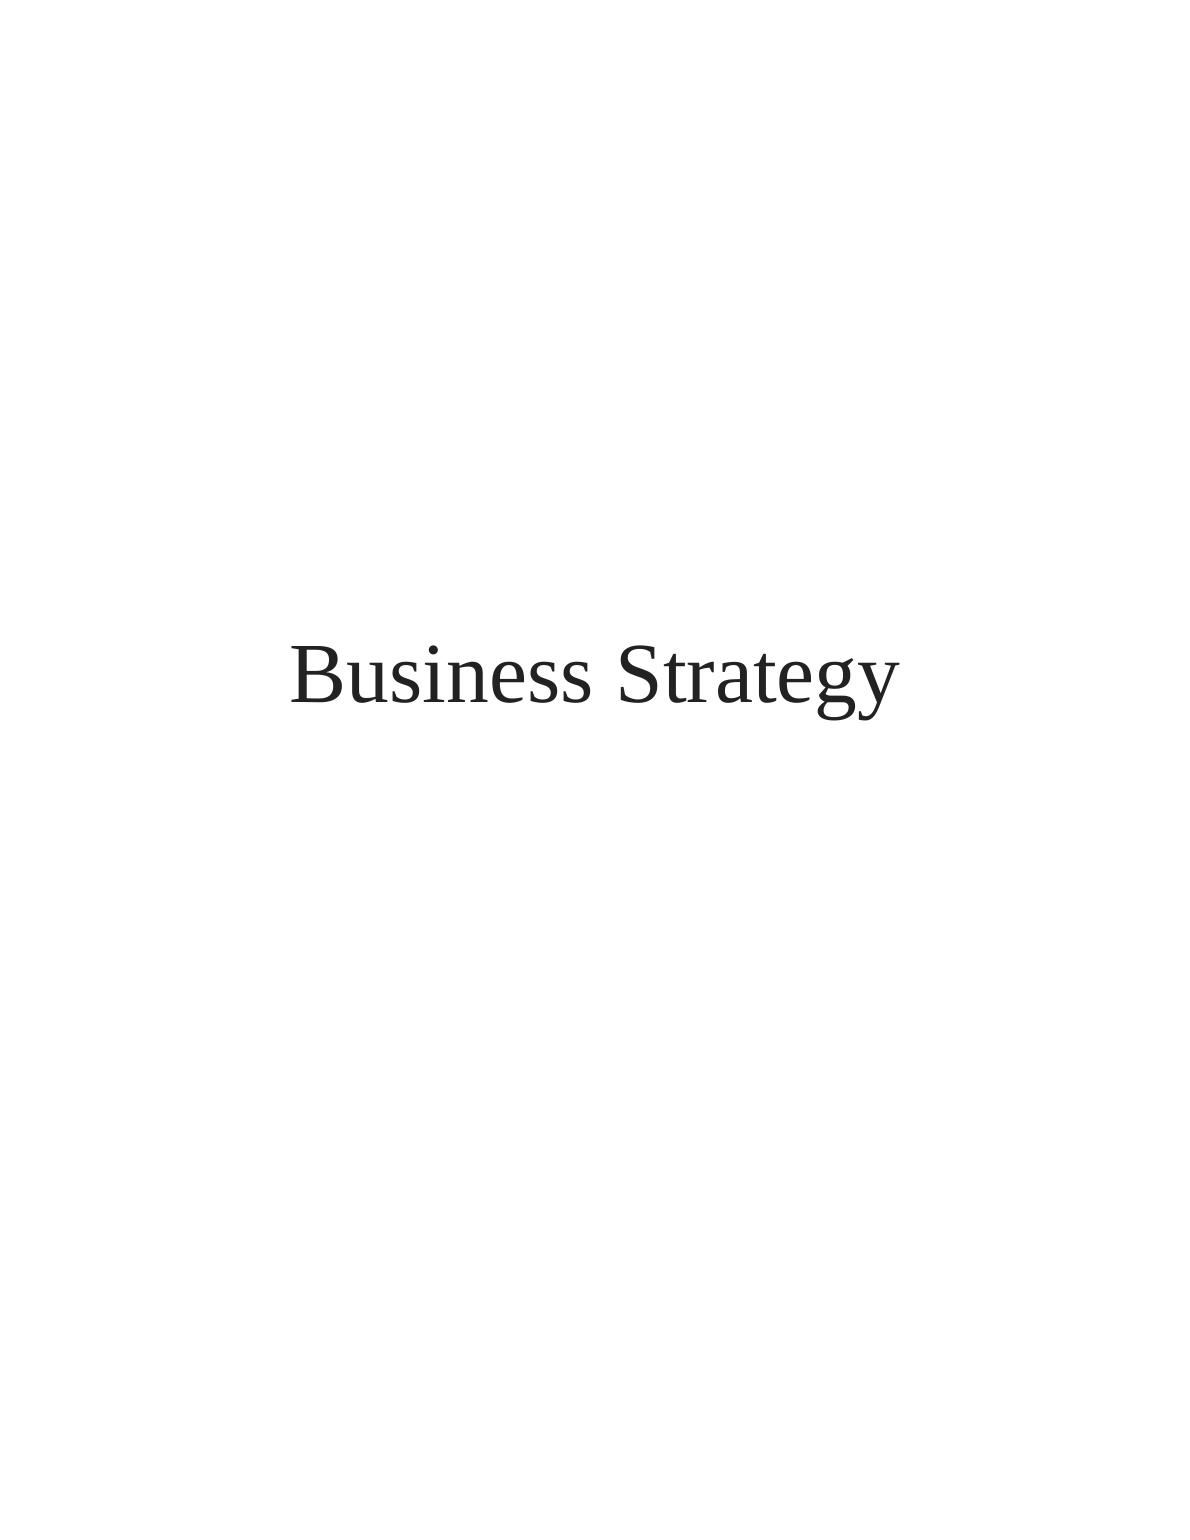 Strategic Management Plan for L'oreal_1